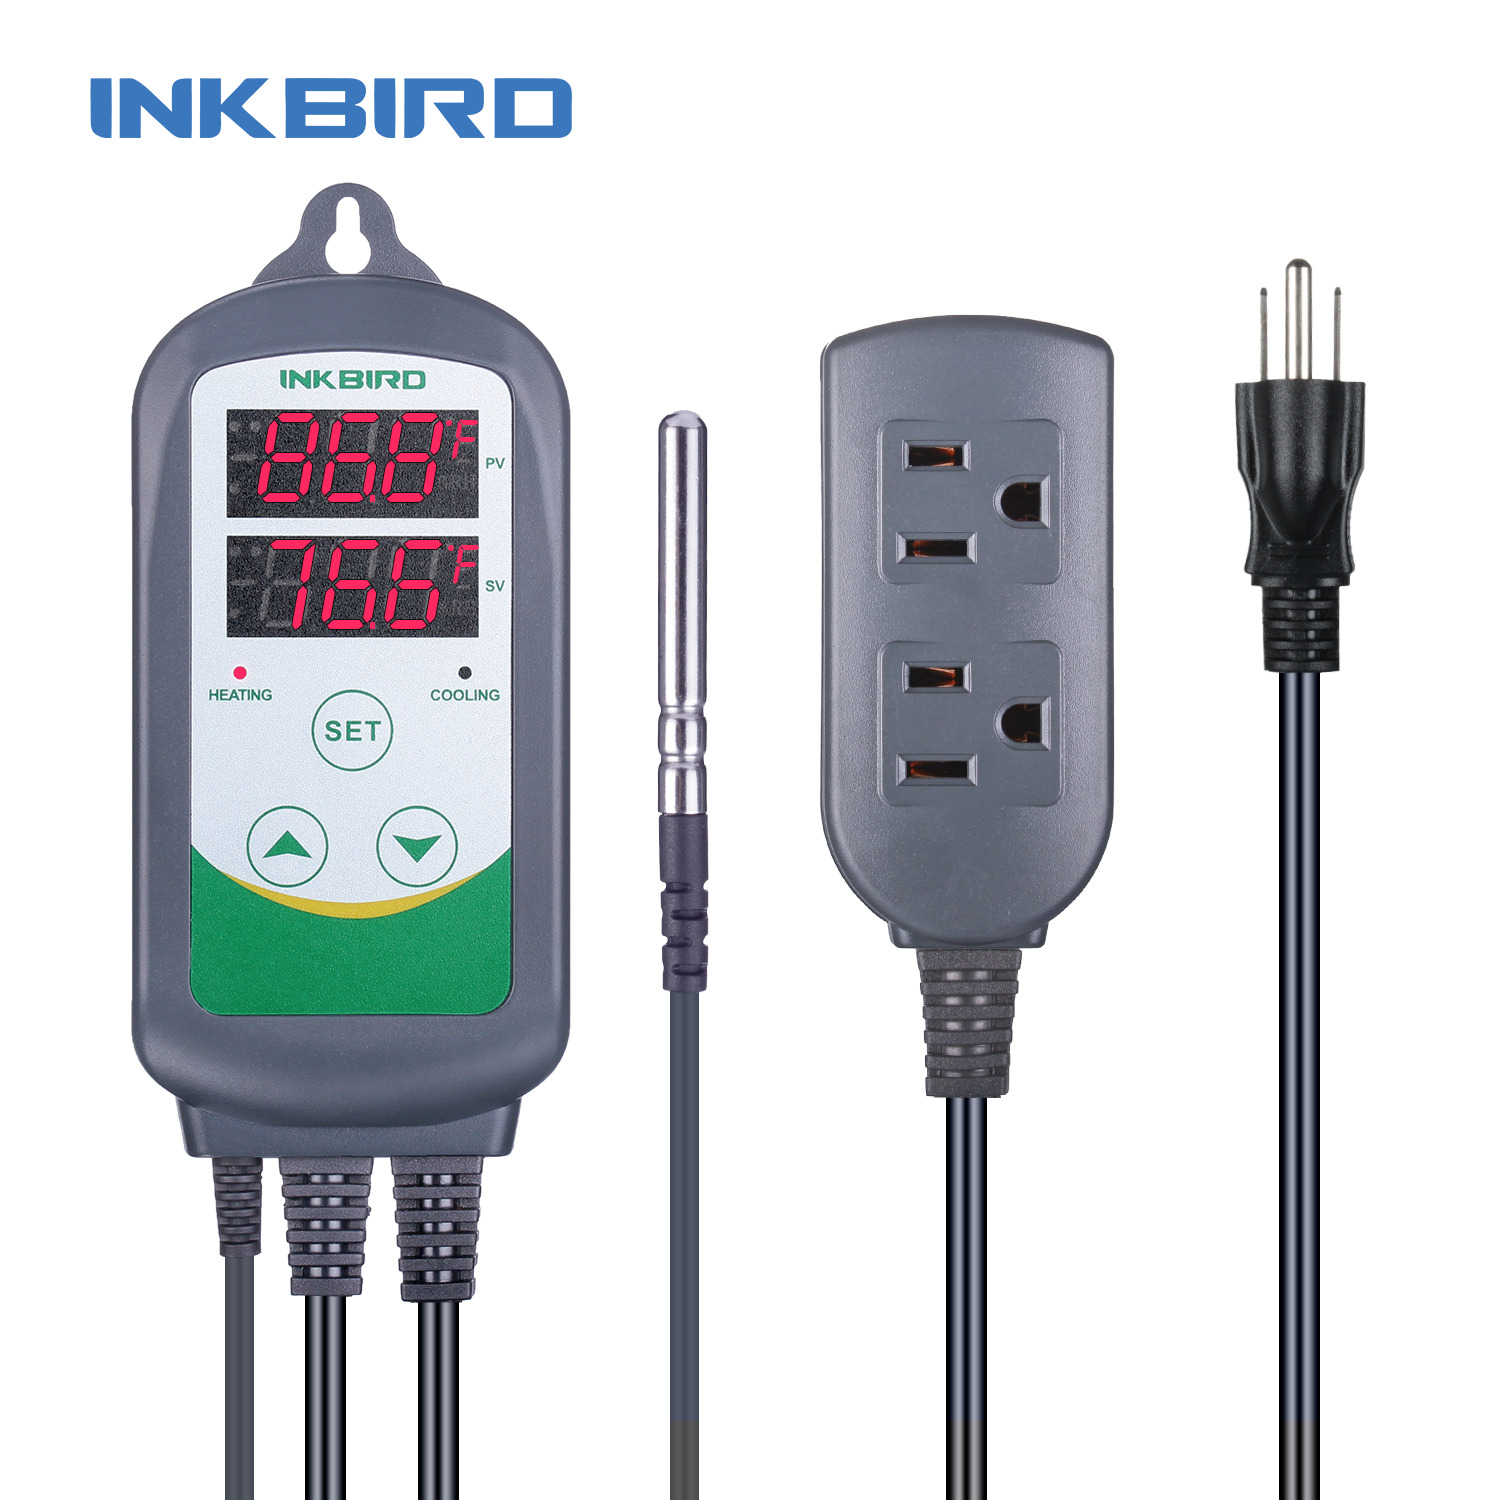 Inkbird ITC-308 Digital Temperature Controller Thermostat Heat & Cool Dual Relay